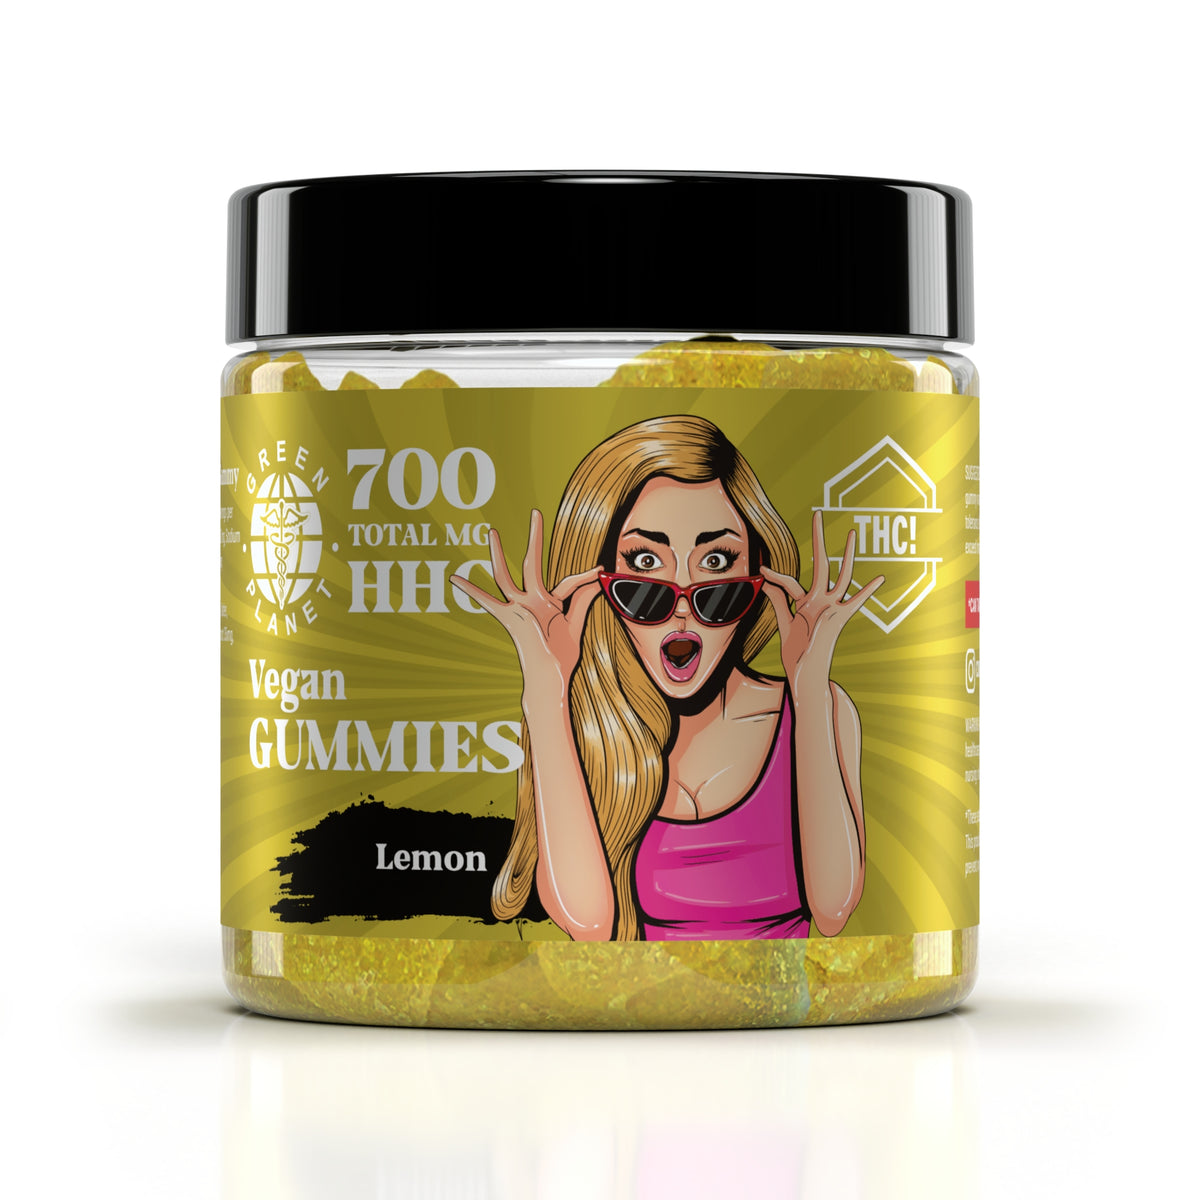 HHC Vegan Gummies Lemon Flavor 700MG